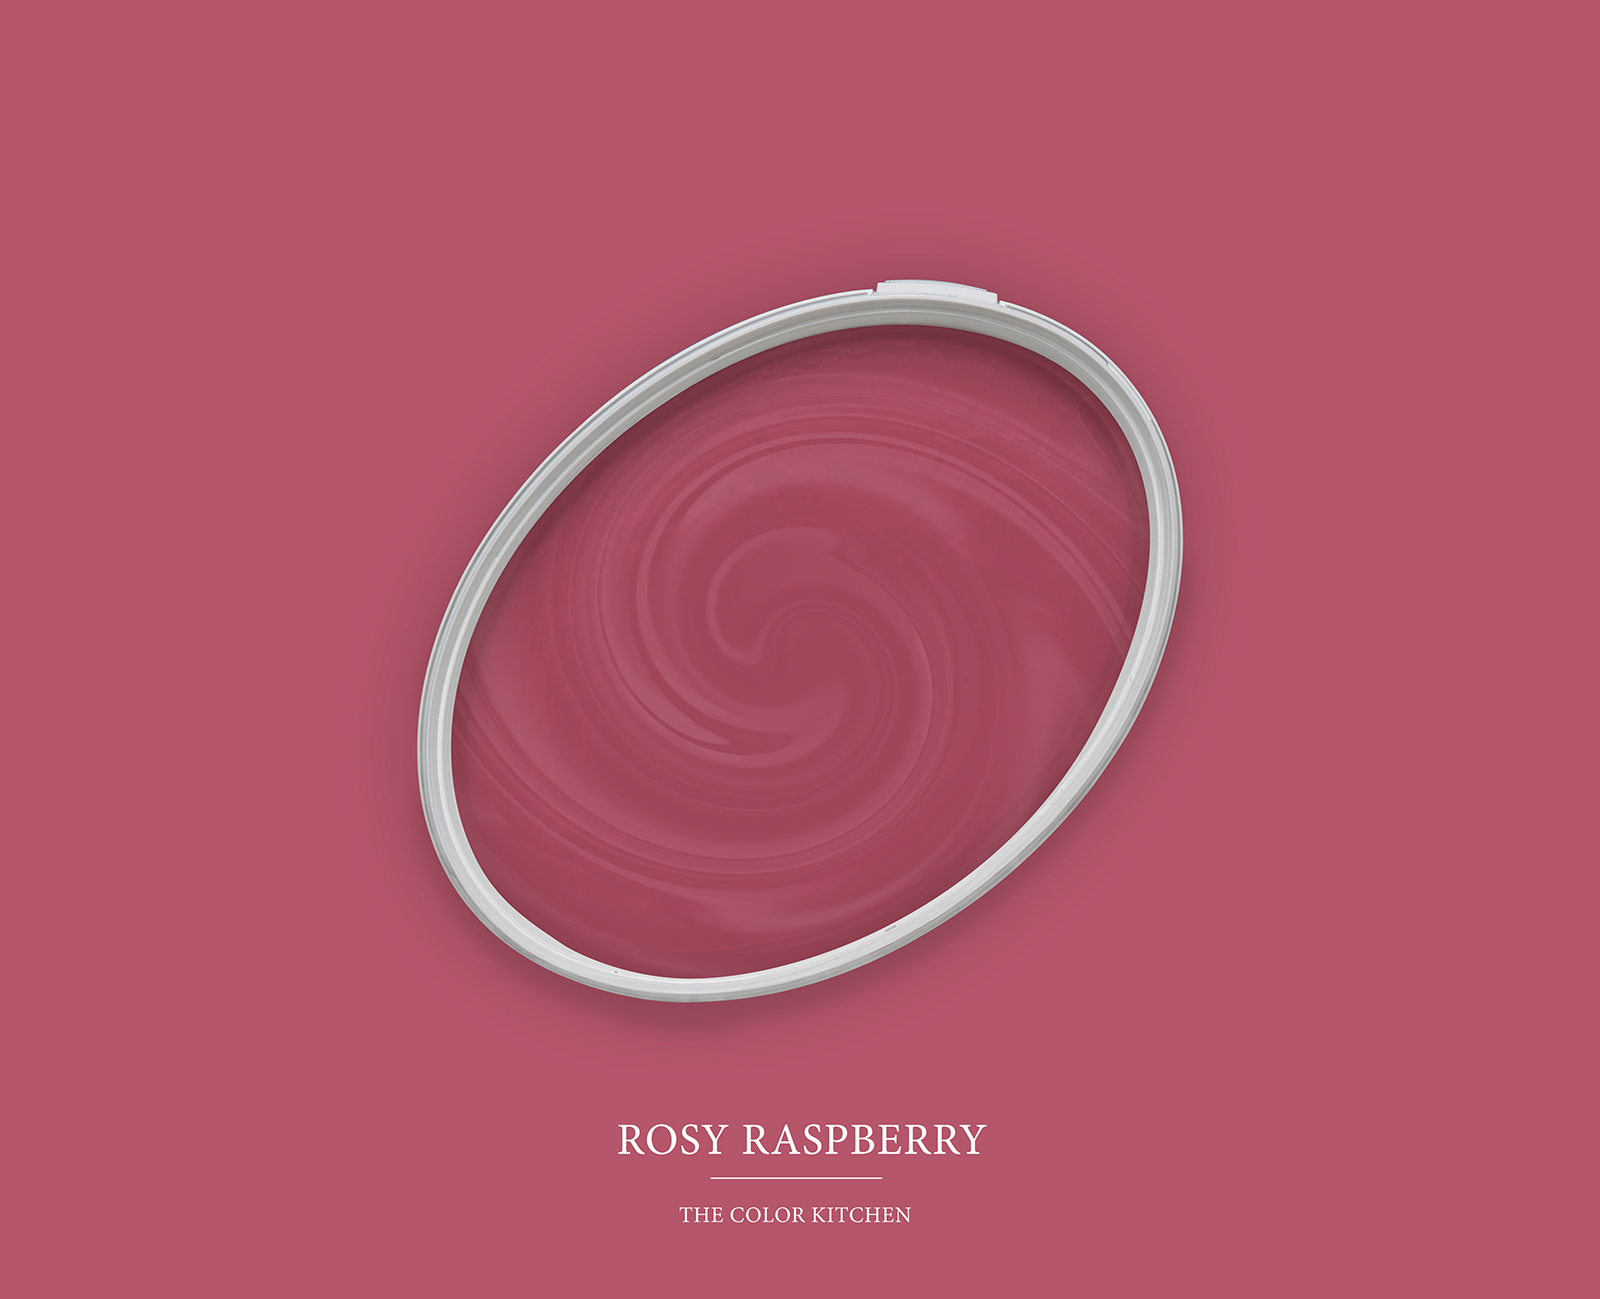         Wandfarbe TCK7011 »Rosy Raspberry« in intensivem Dunkelrosa – 2,5 Liter
    